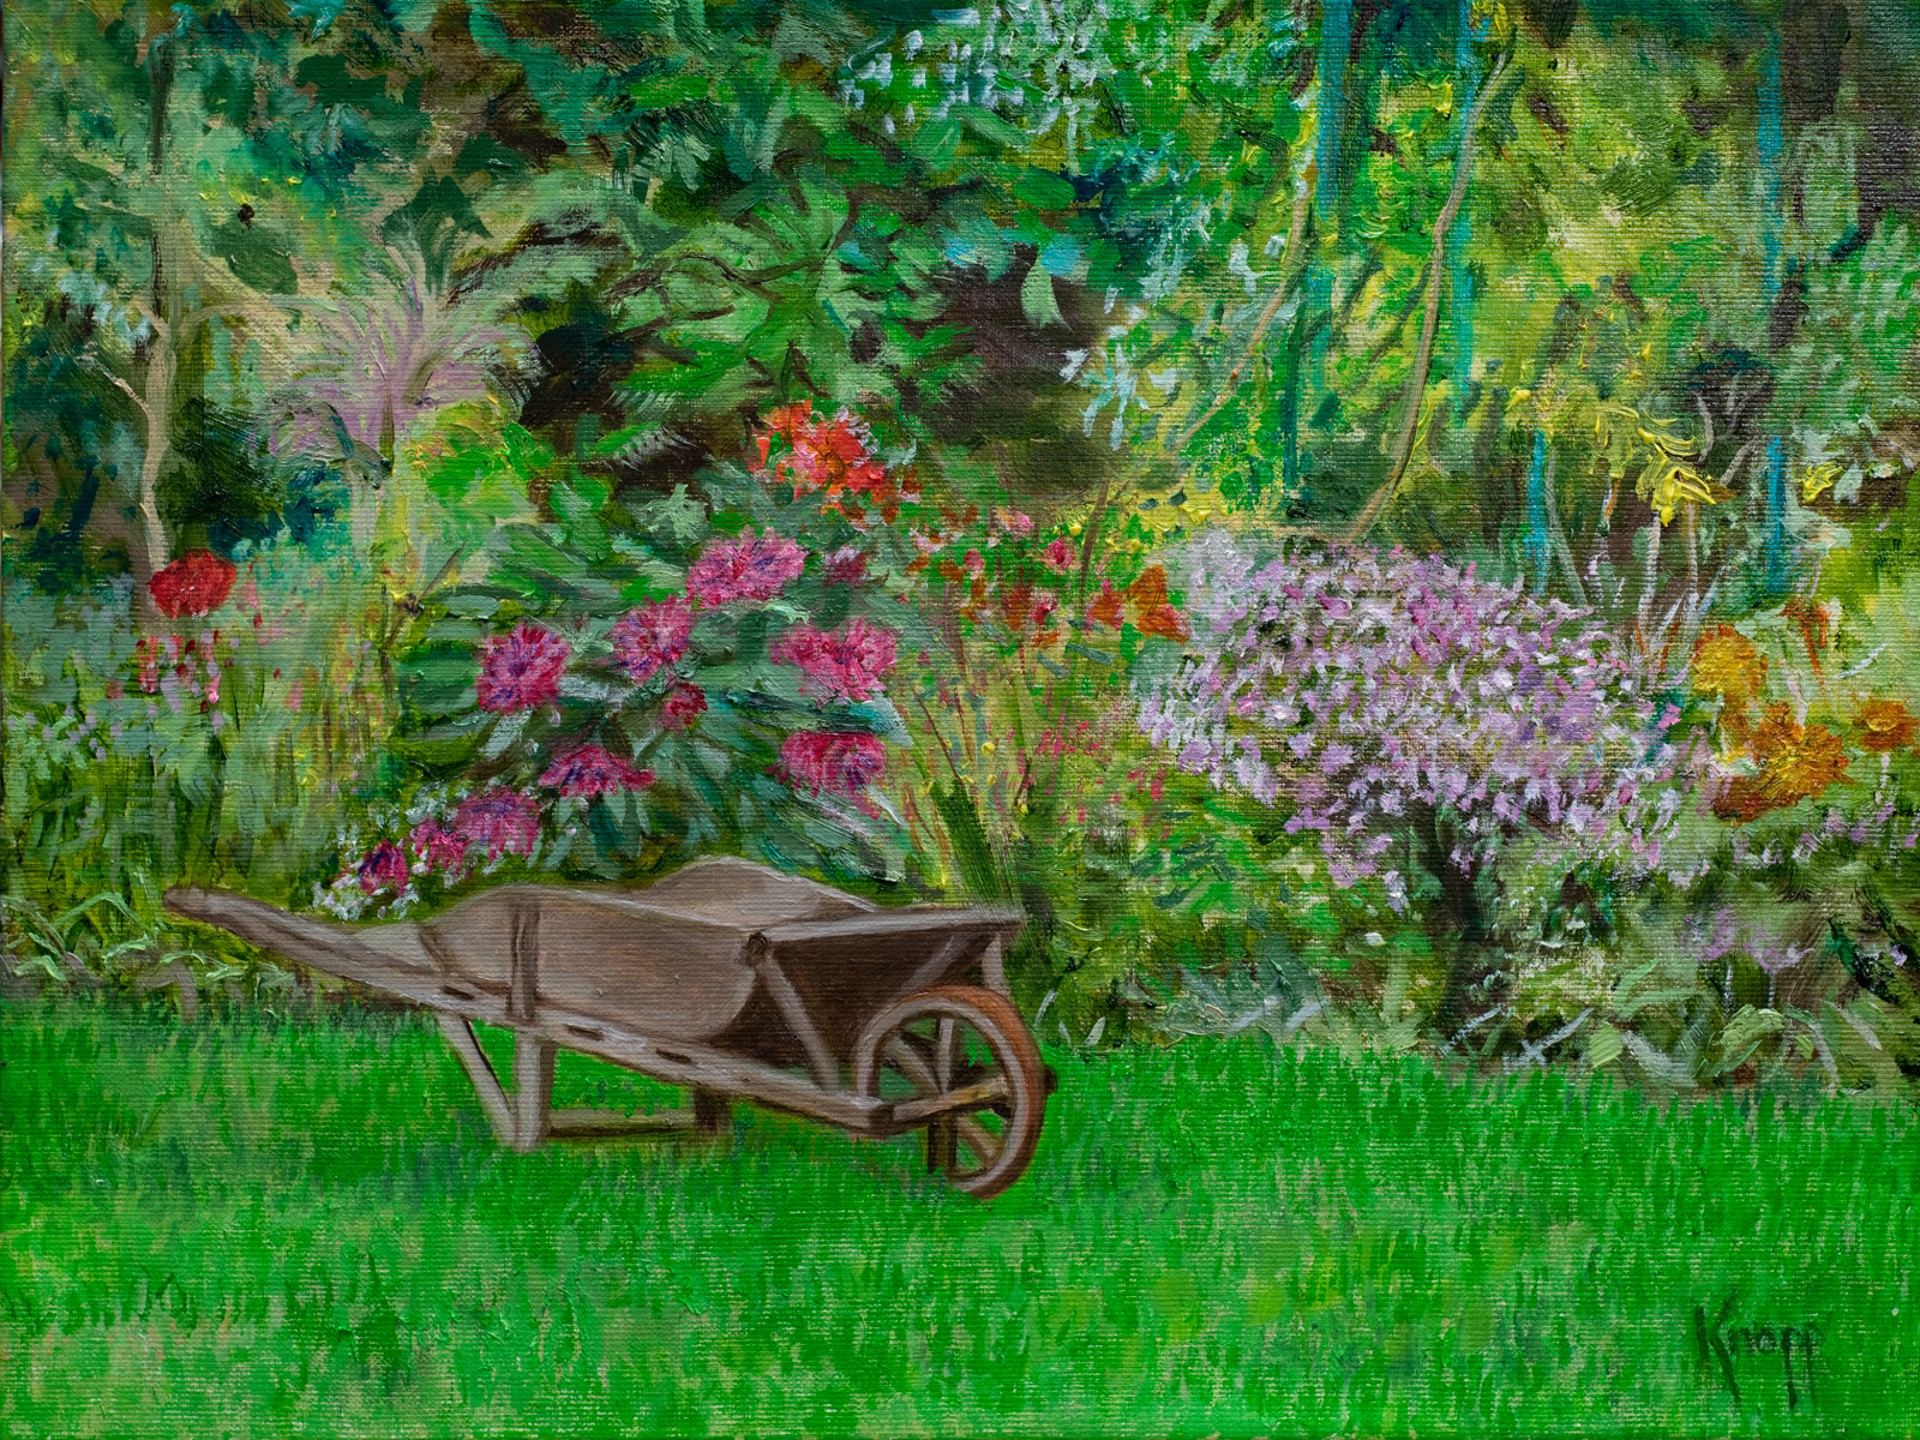 Monet's Wheelbarrel by Kathy Knopp